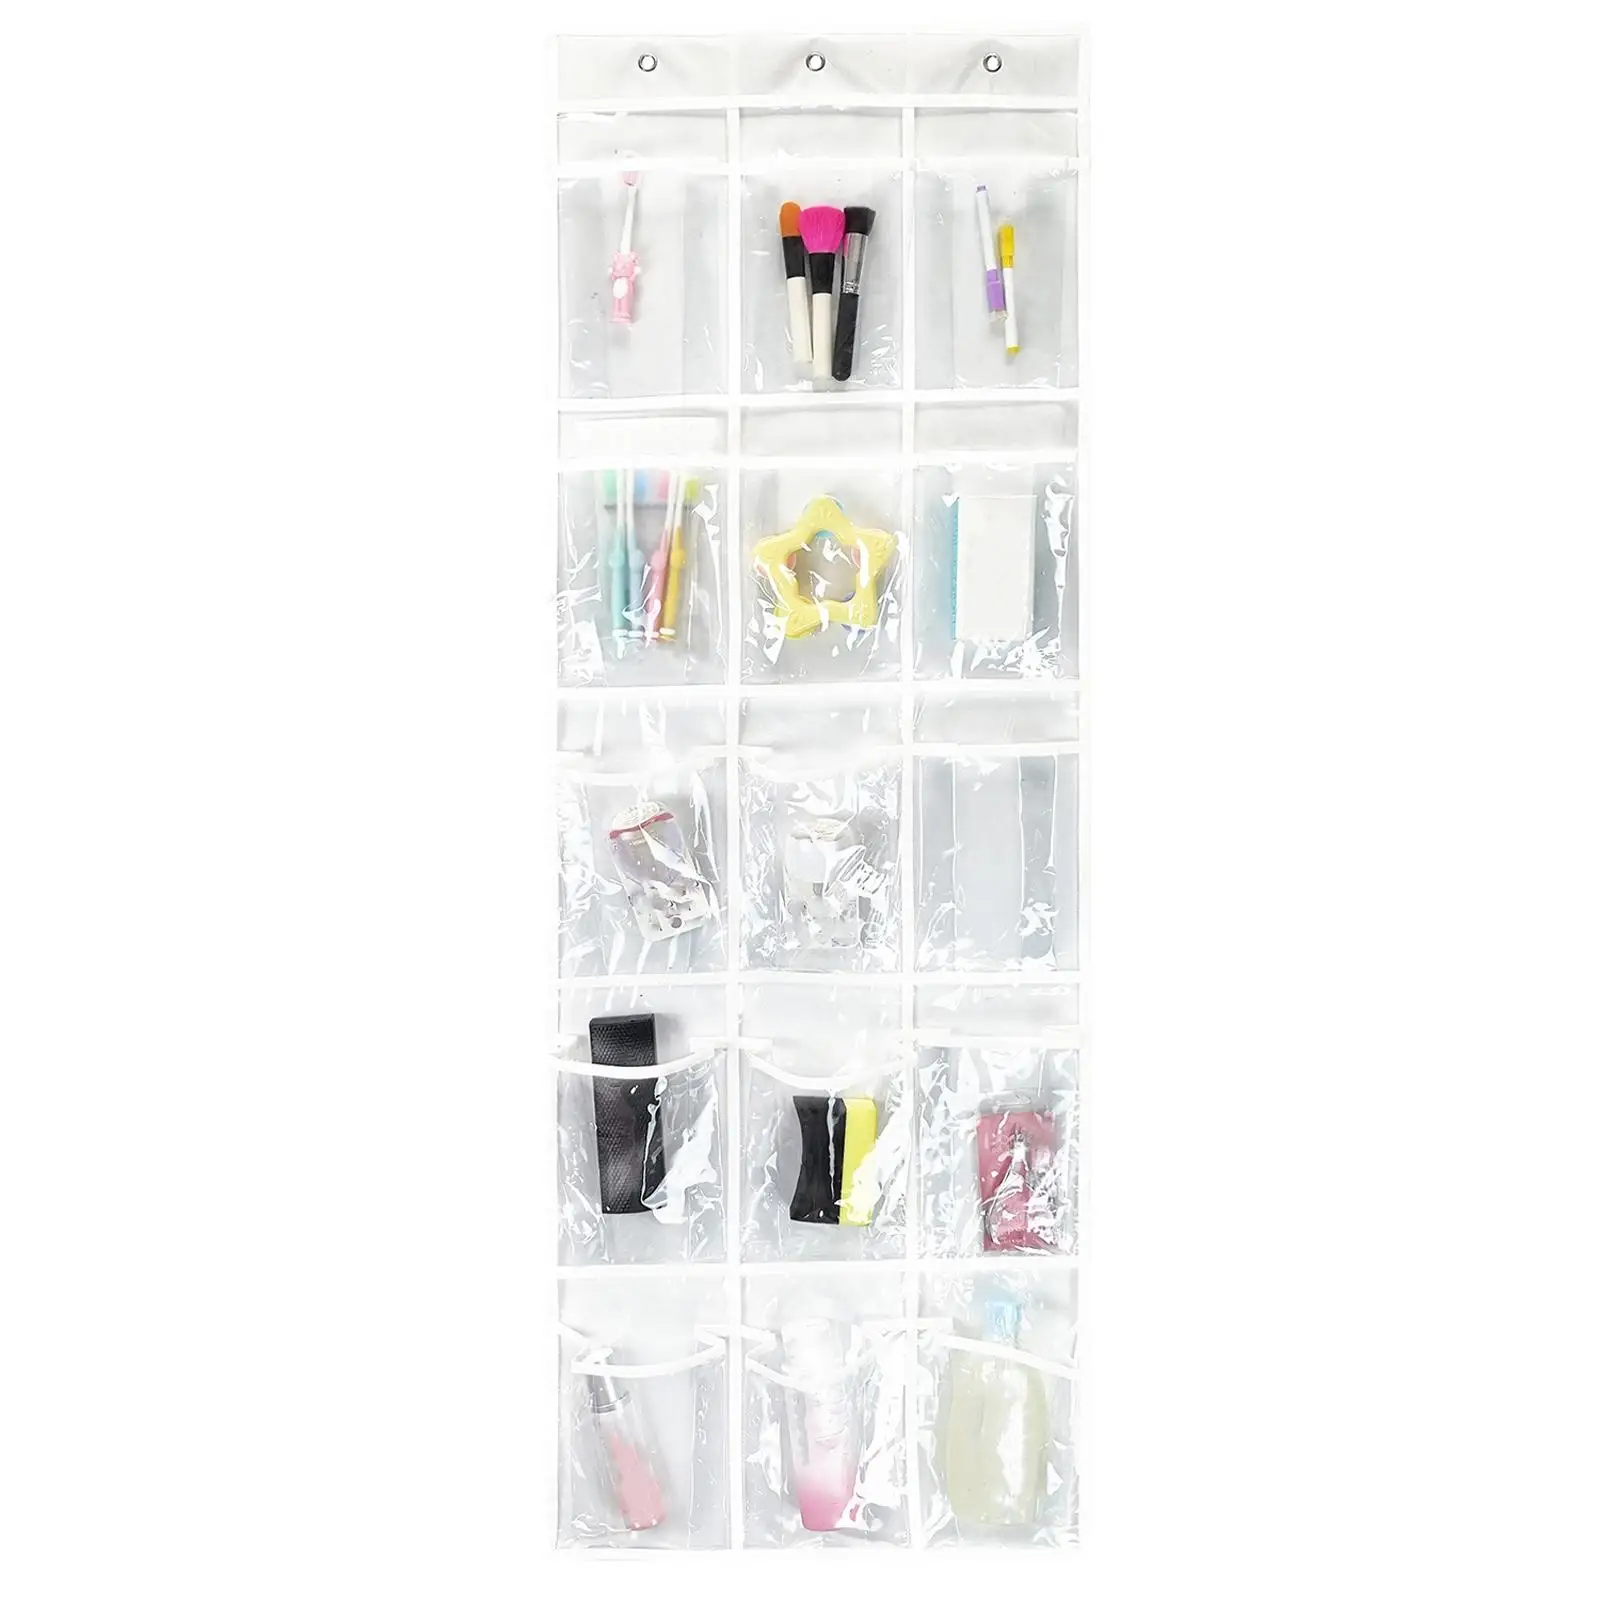 Hanging Closet Underwear Sock Bra Organizer with 15 Clear Pockets Wall Shelf Wardrobe Storage Bags for Underwear Socks Stocking